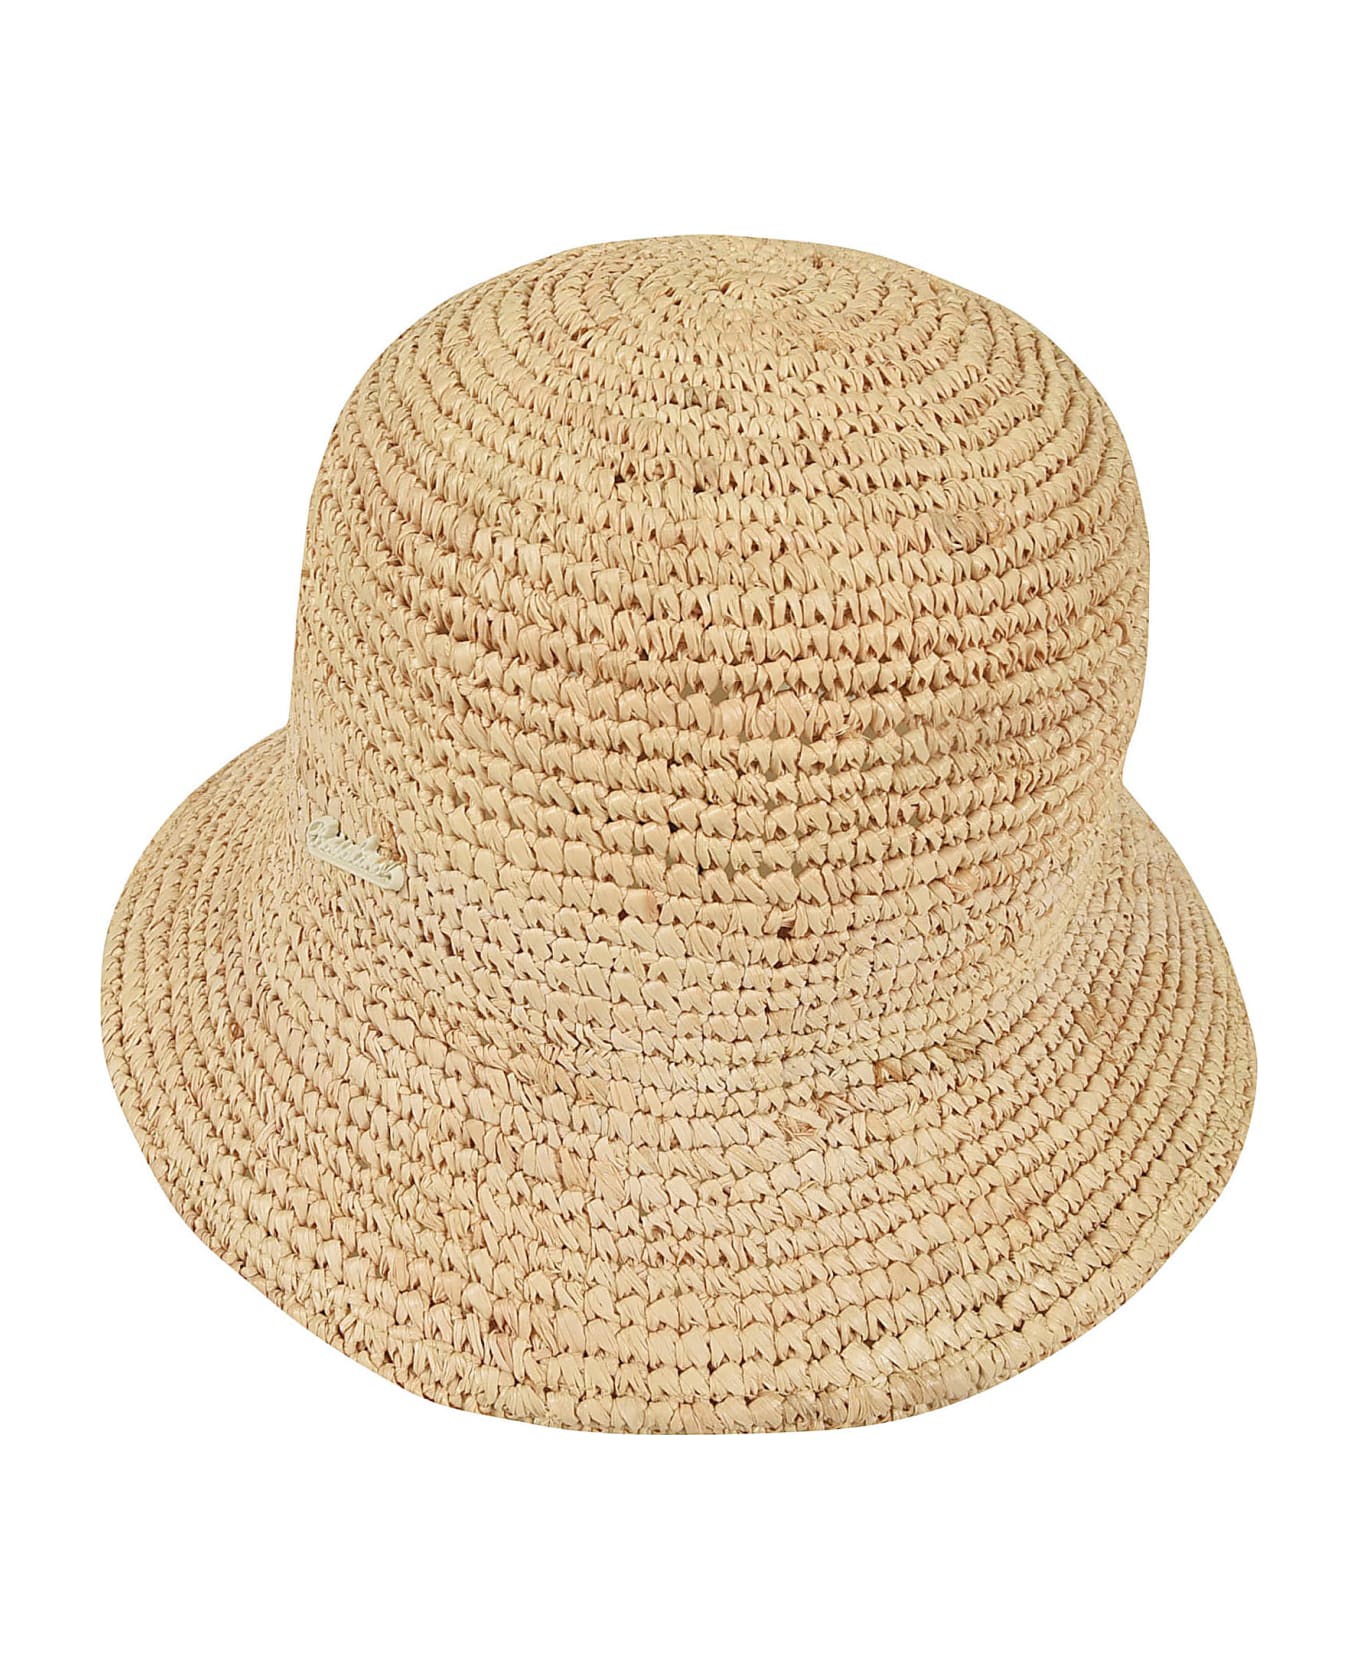 Borsalino Rafia Crochet Bucket Hat - 7140